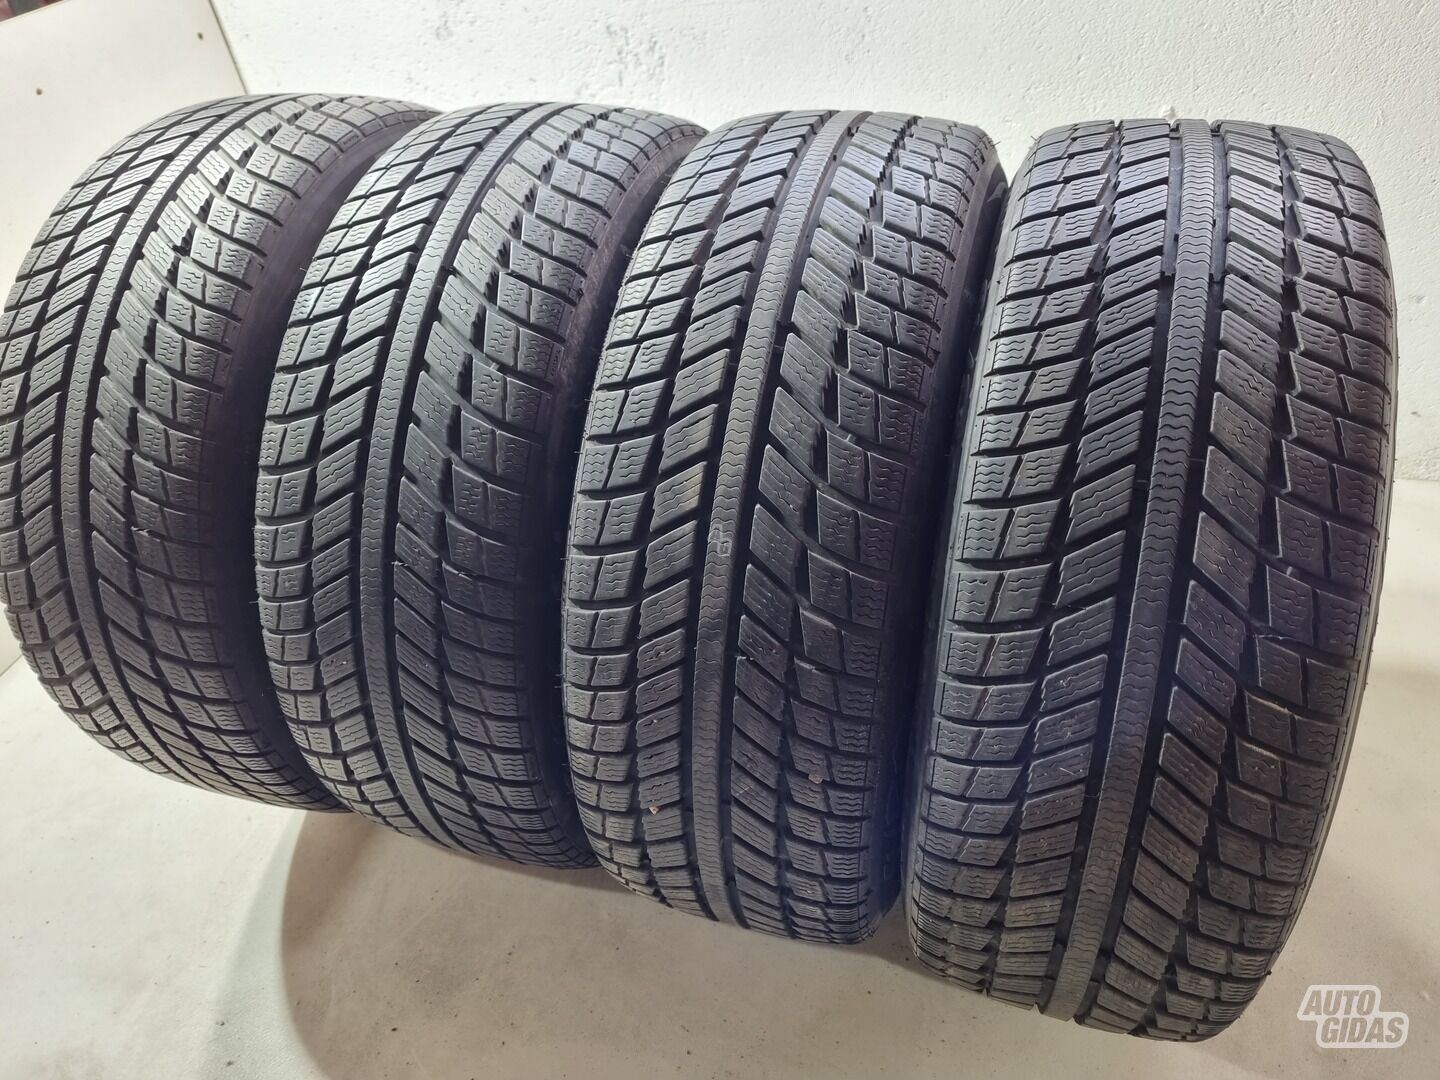 Syron 7mm, 2018m R17 universal tyres passanger car